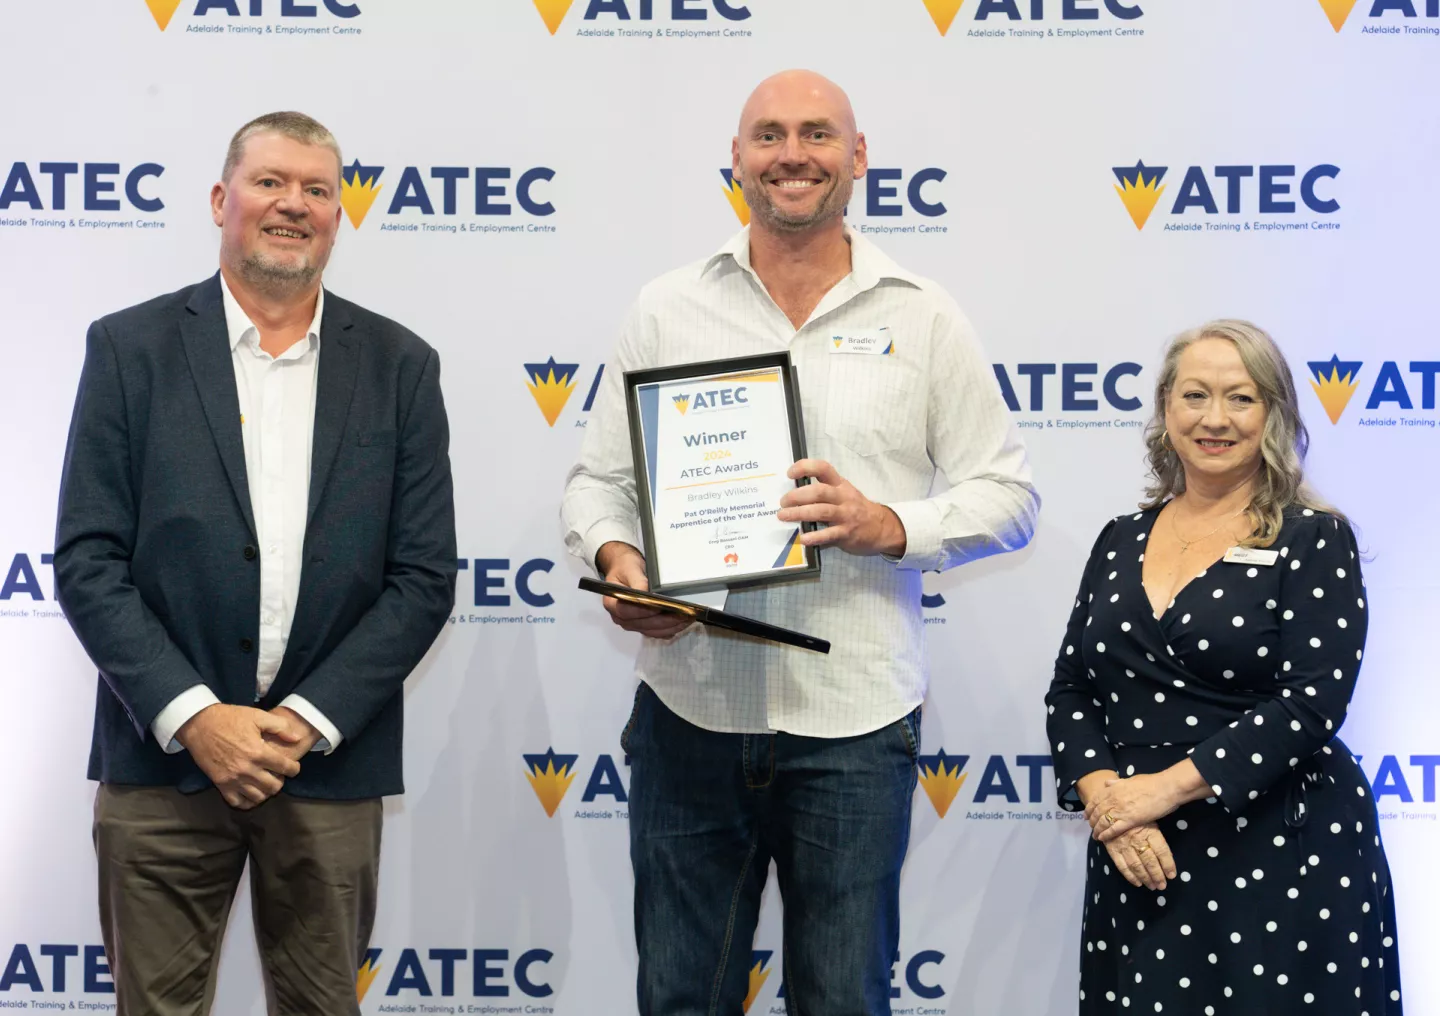 ATEC carpentry apprentice Brad Wilkins wins the Apprentice of the Year Award.